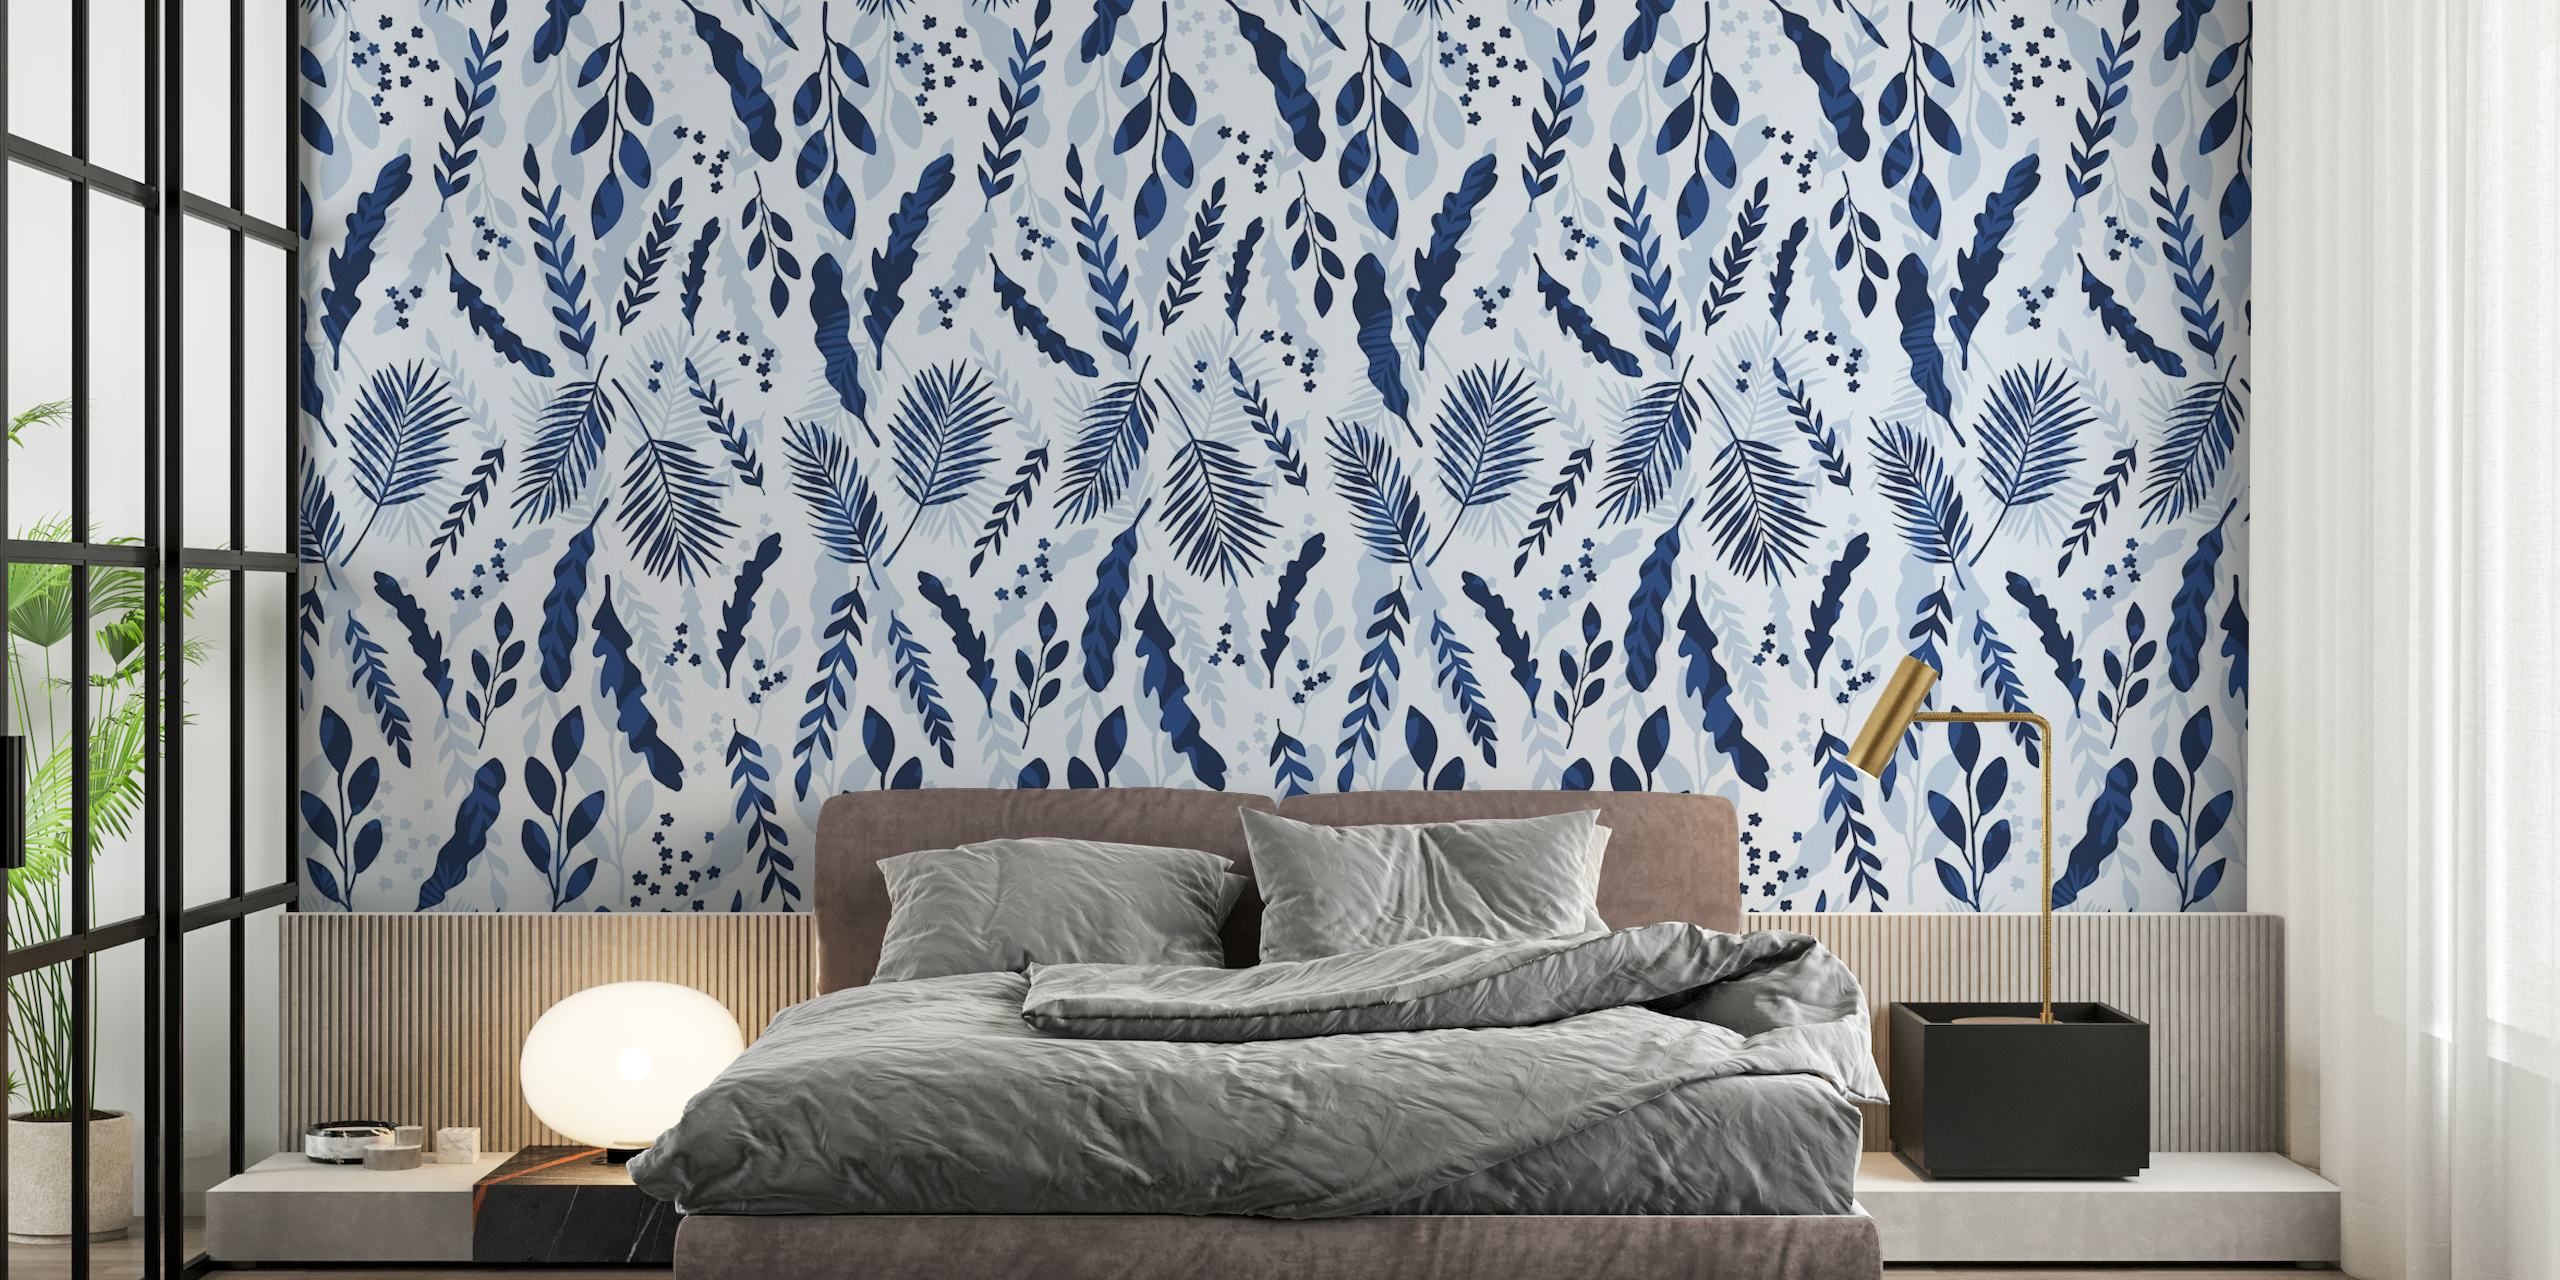 Blue and white marine botanical pattern wall mural